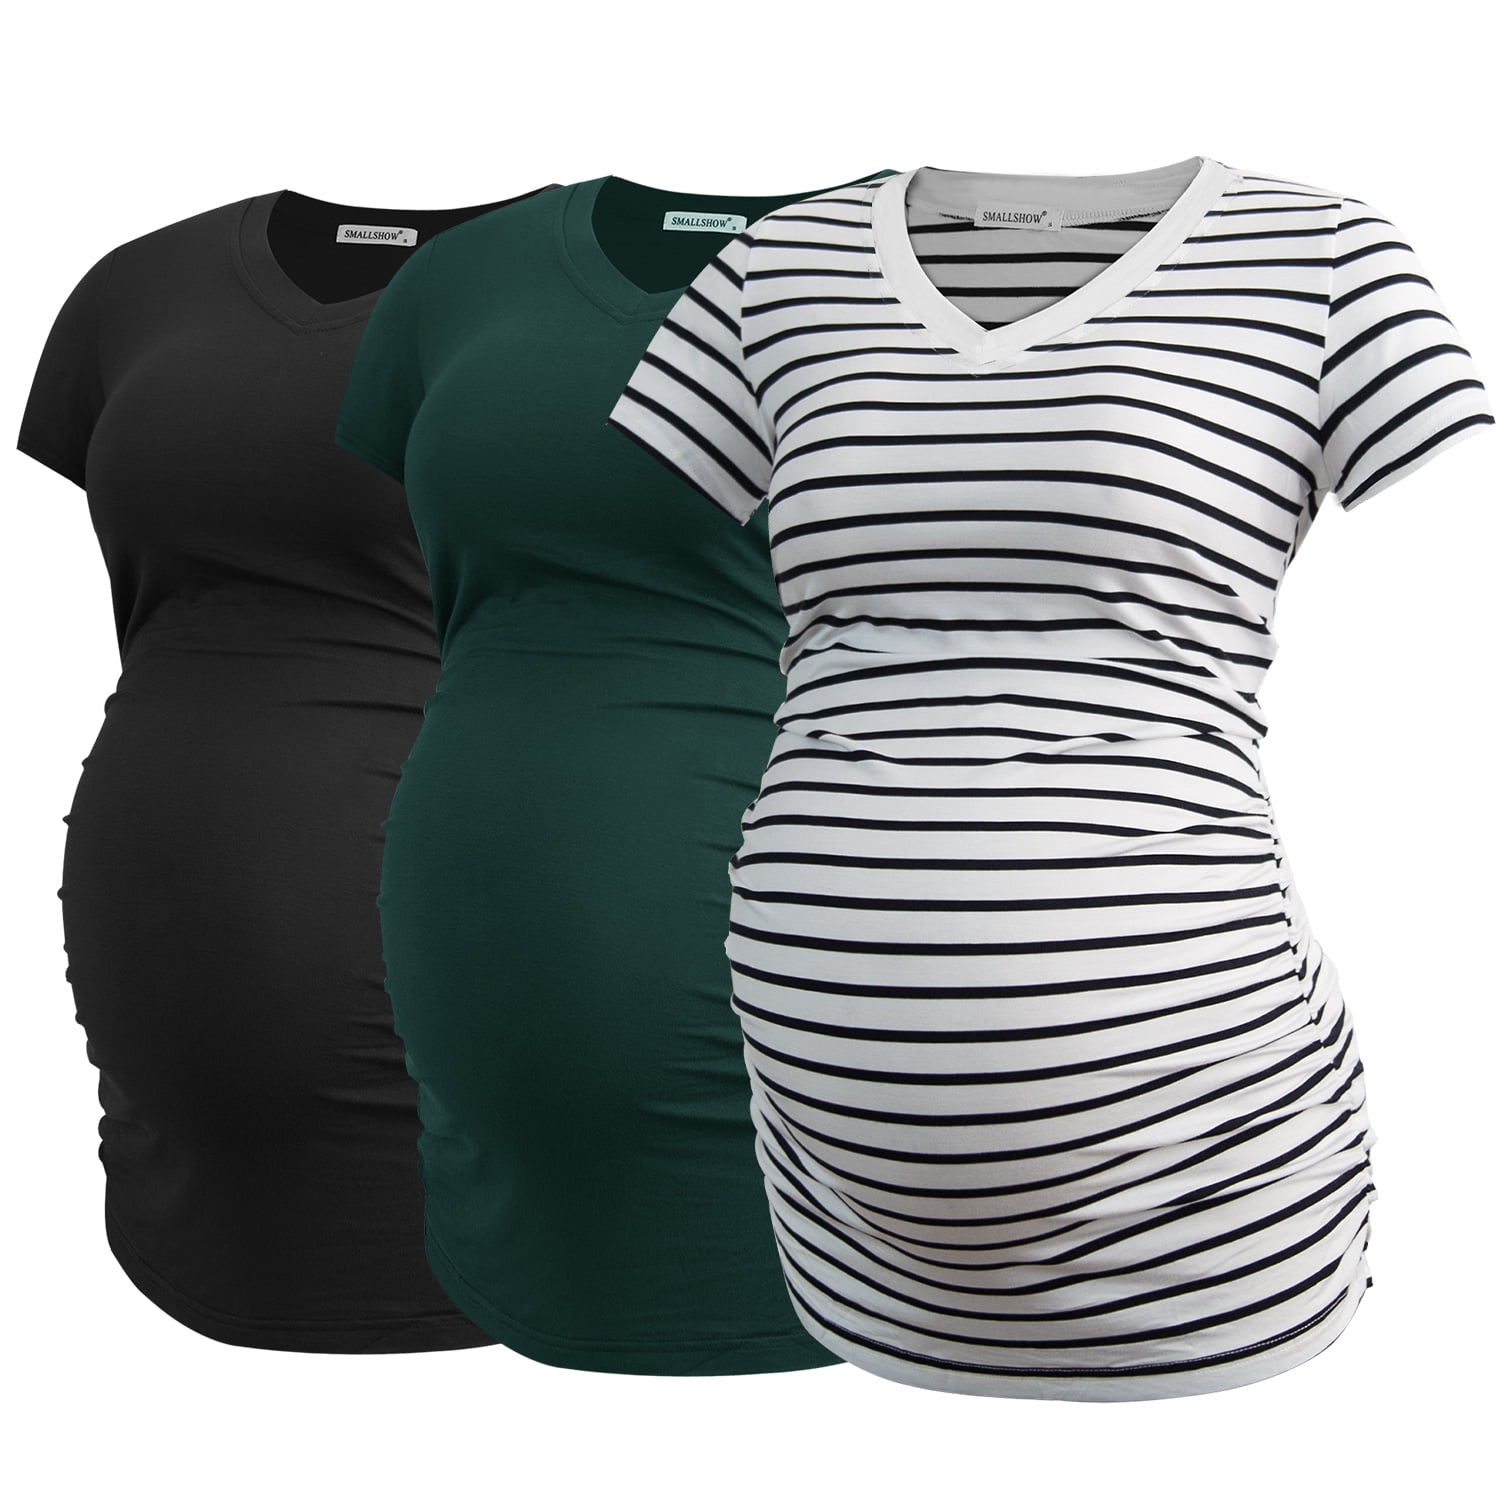 Smallshow Women's V Neck Maternity Tops Clothes Short Sleeve